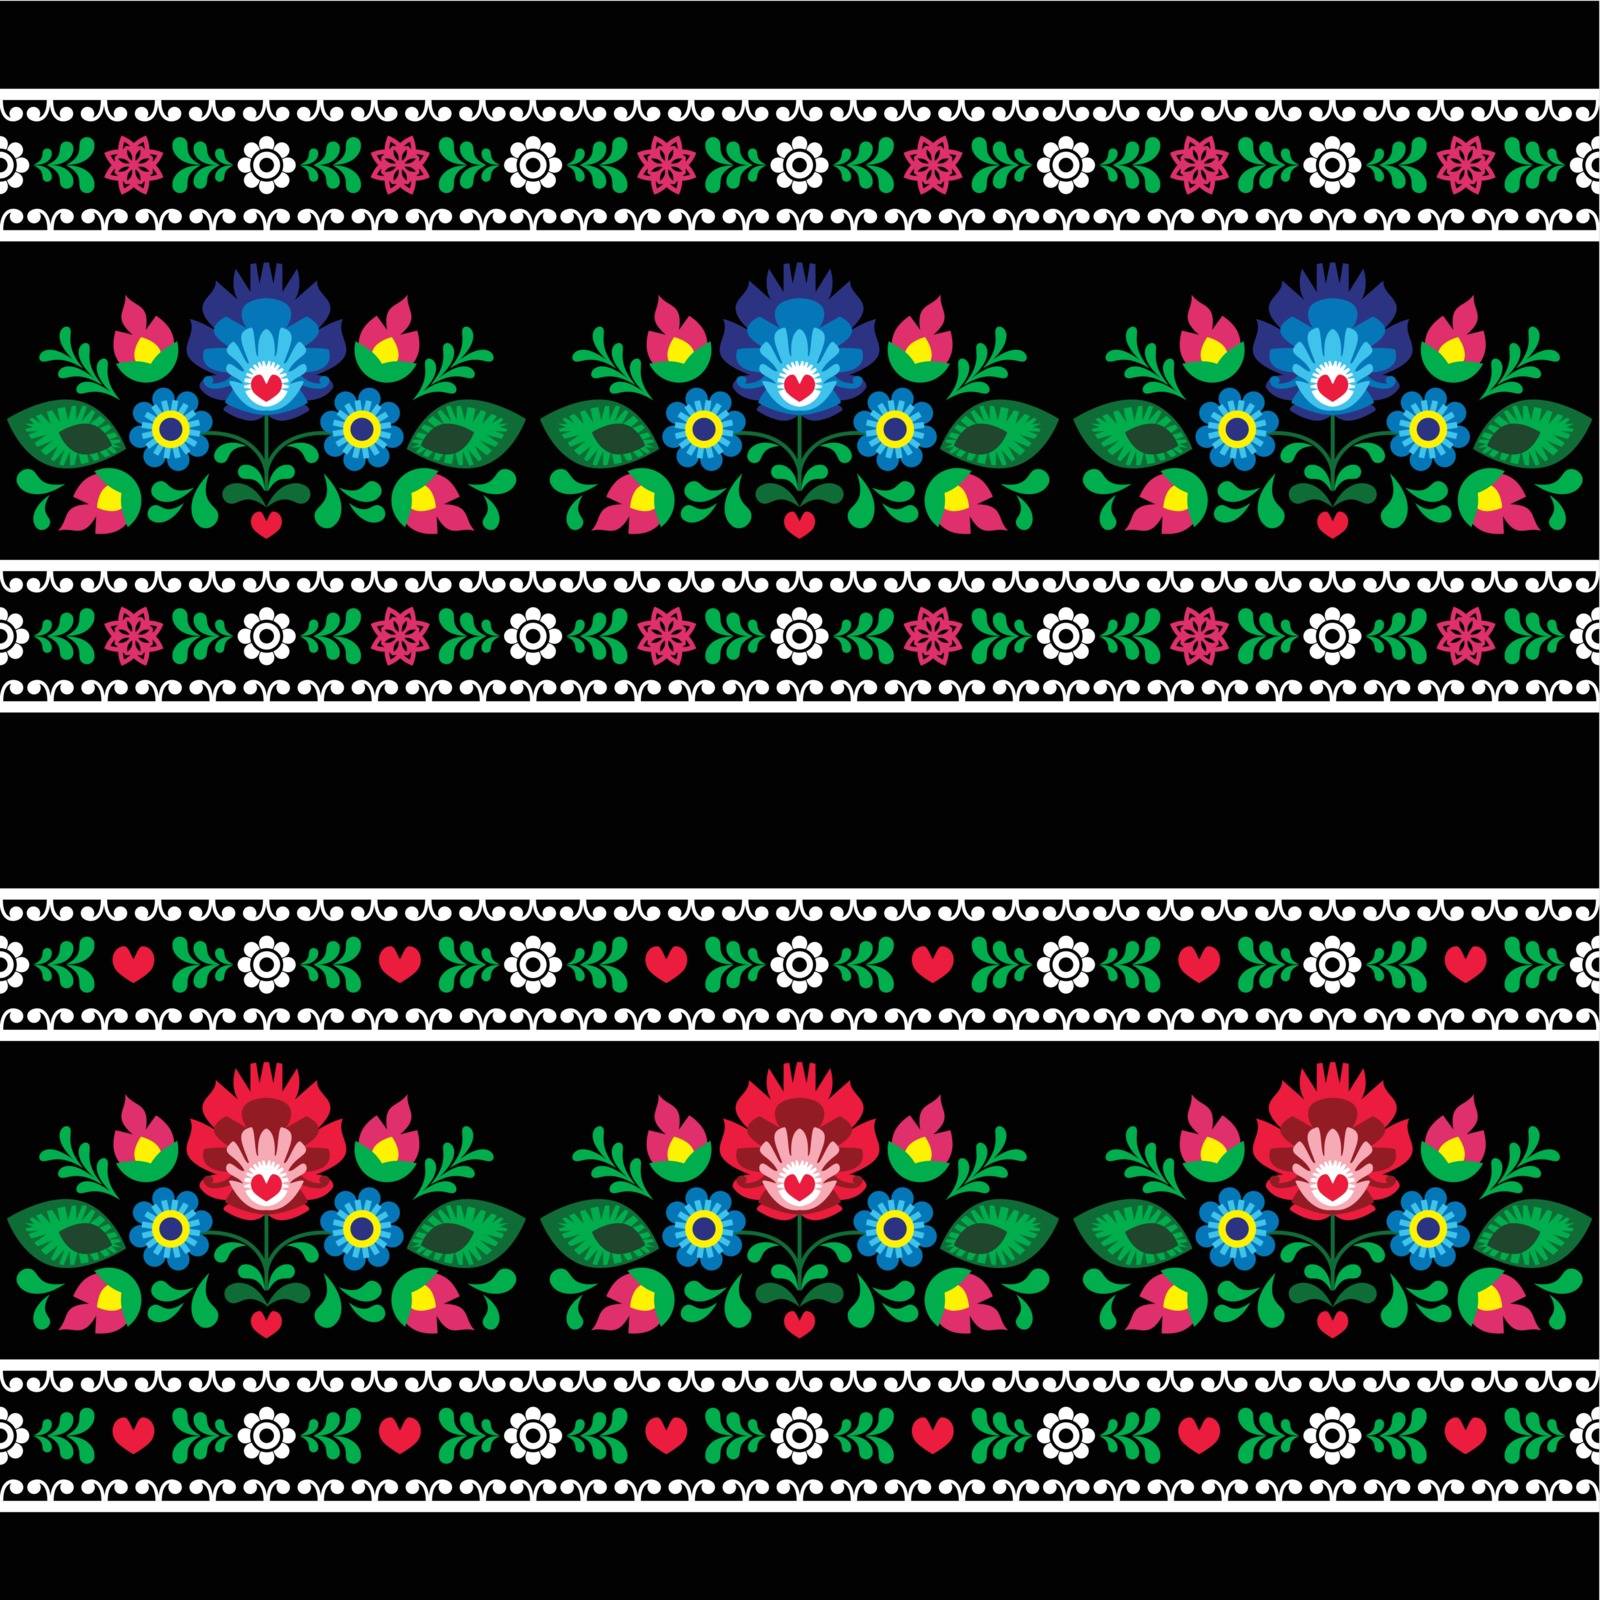 Repetitive cutout style background - Polish folk art decoration elements